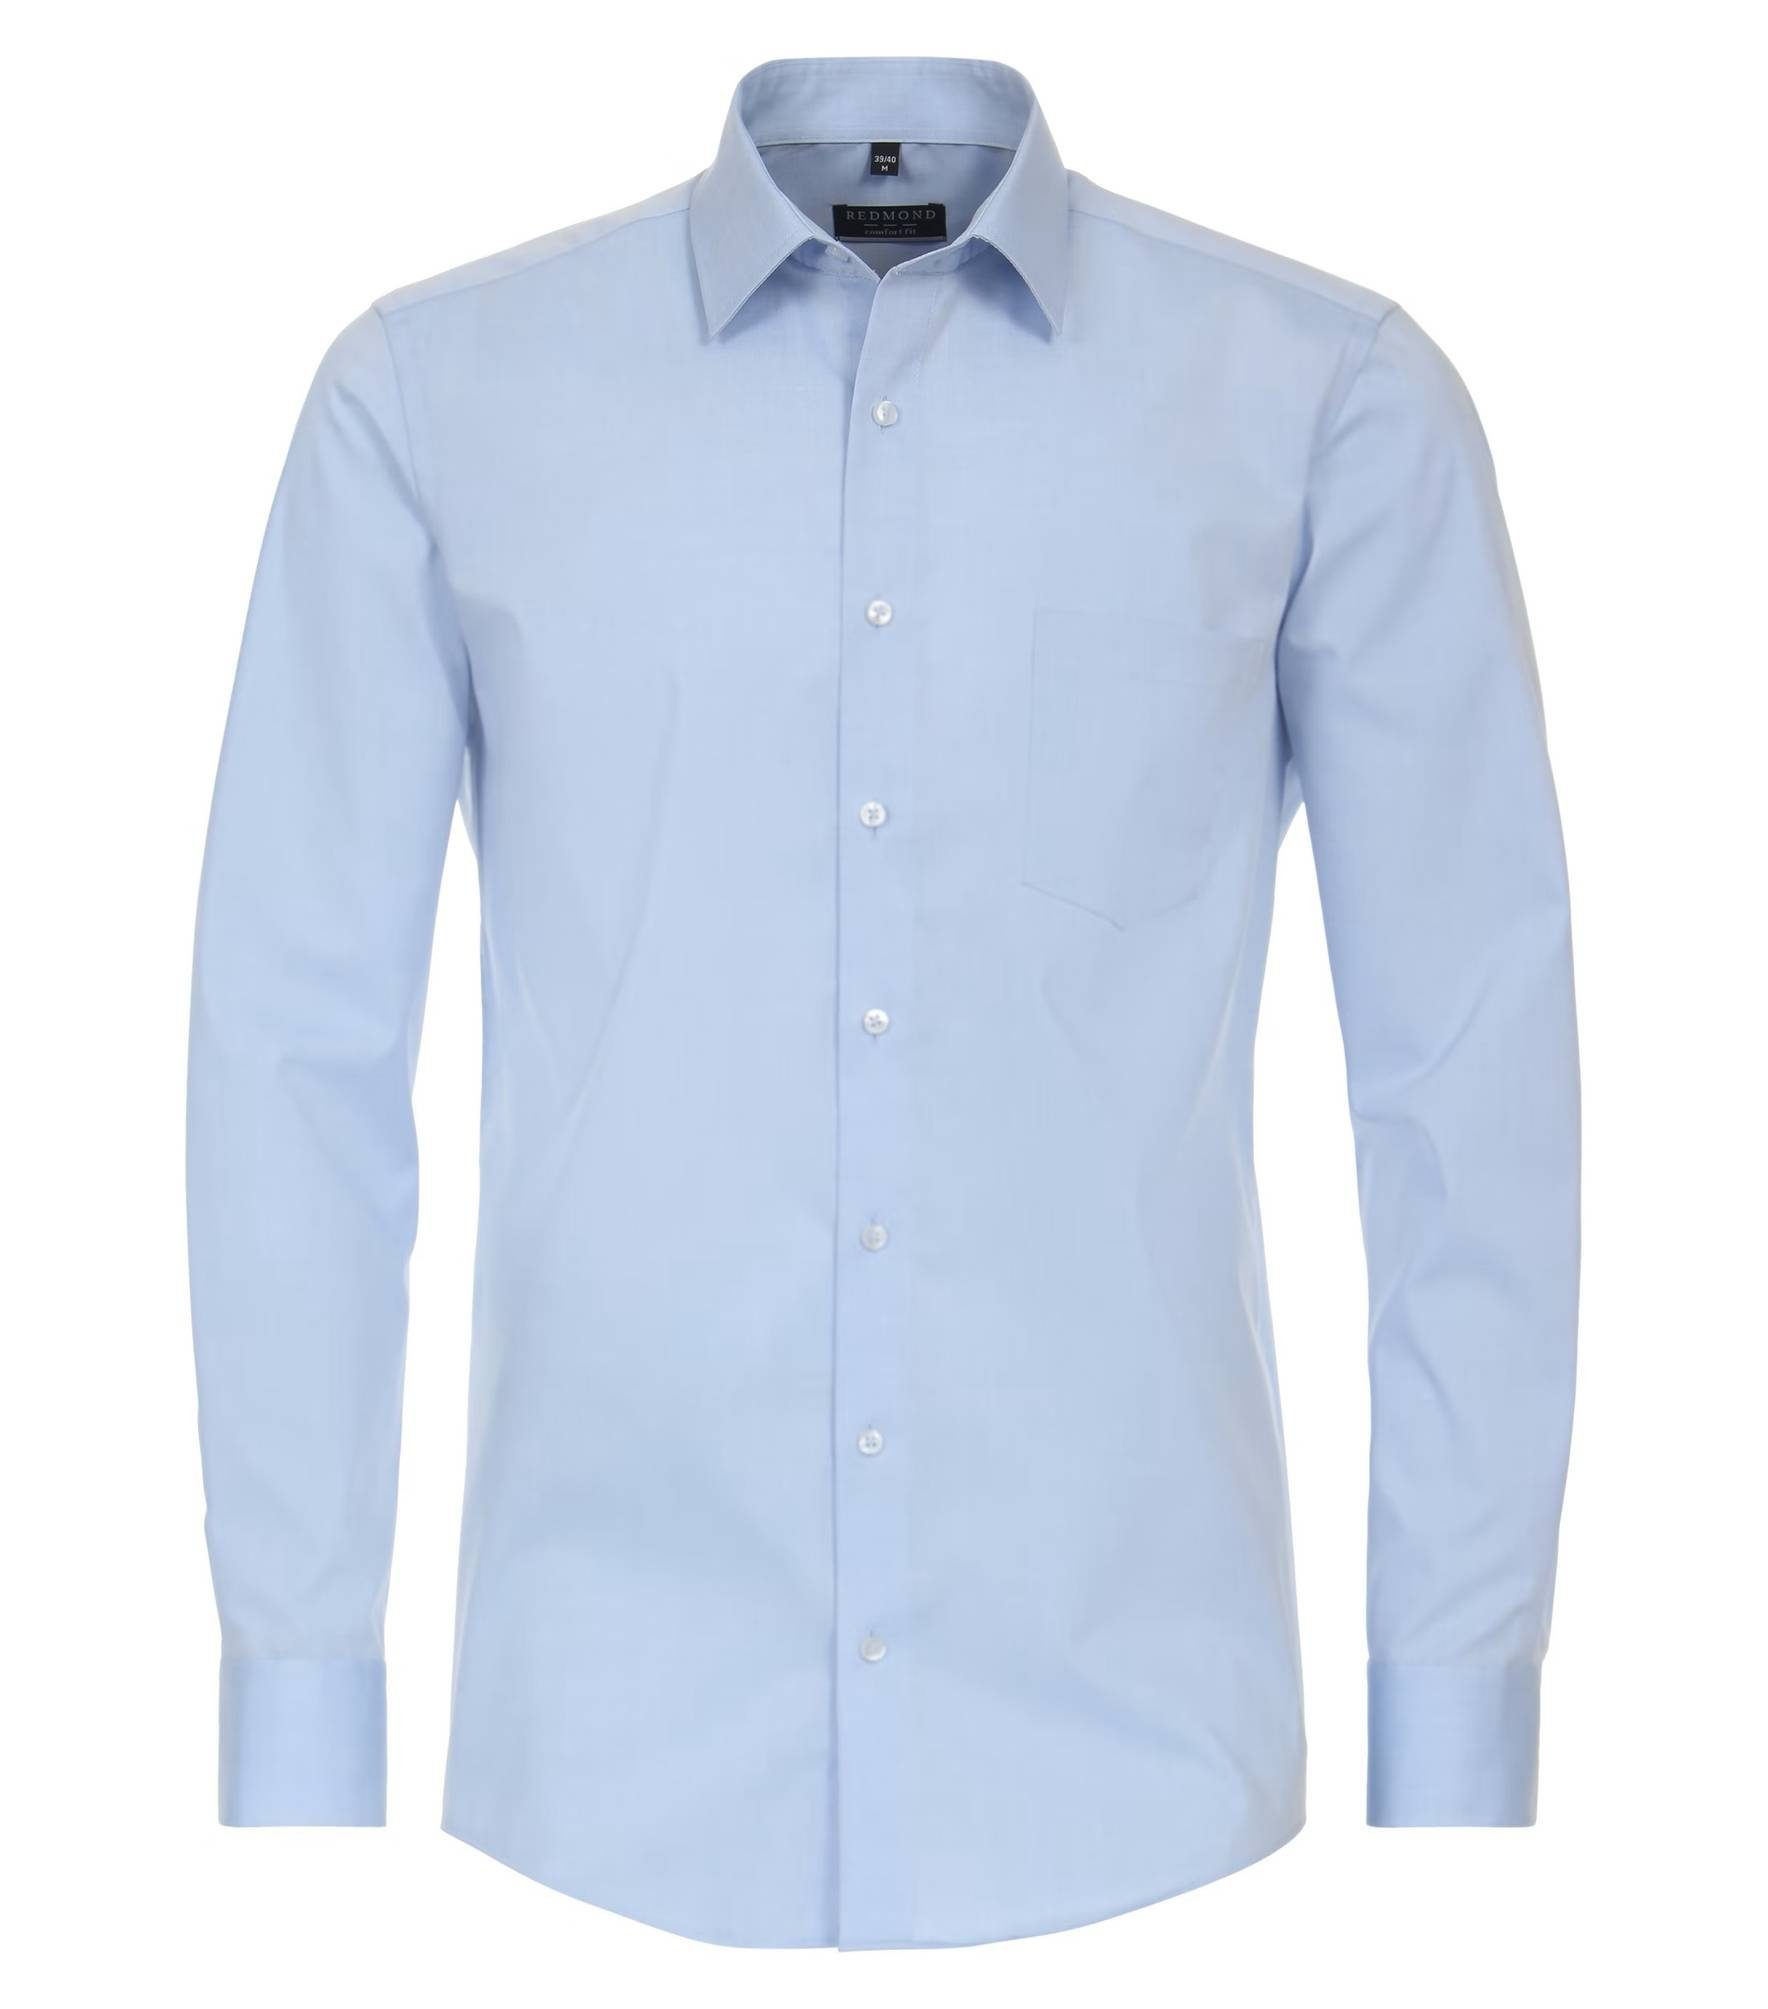 Redmond Langarmhemd Regular Fit Regular Blau(10) Fit